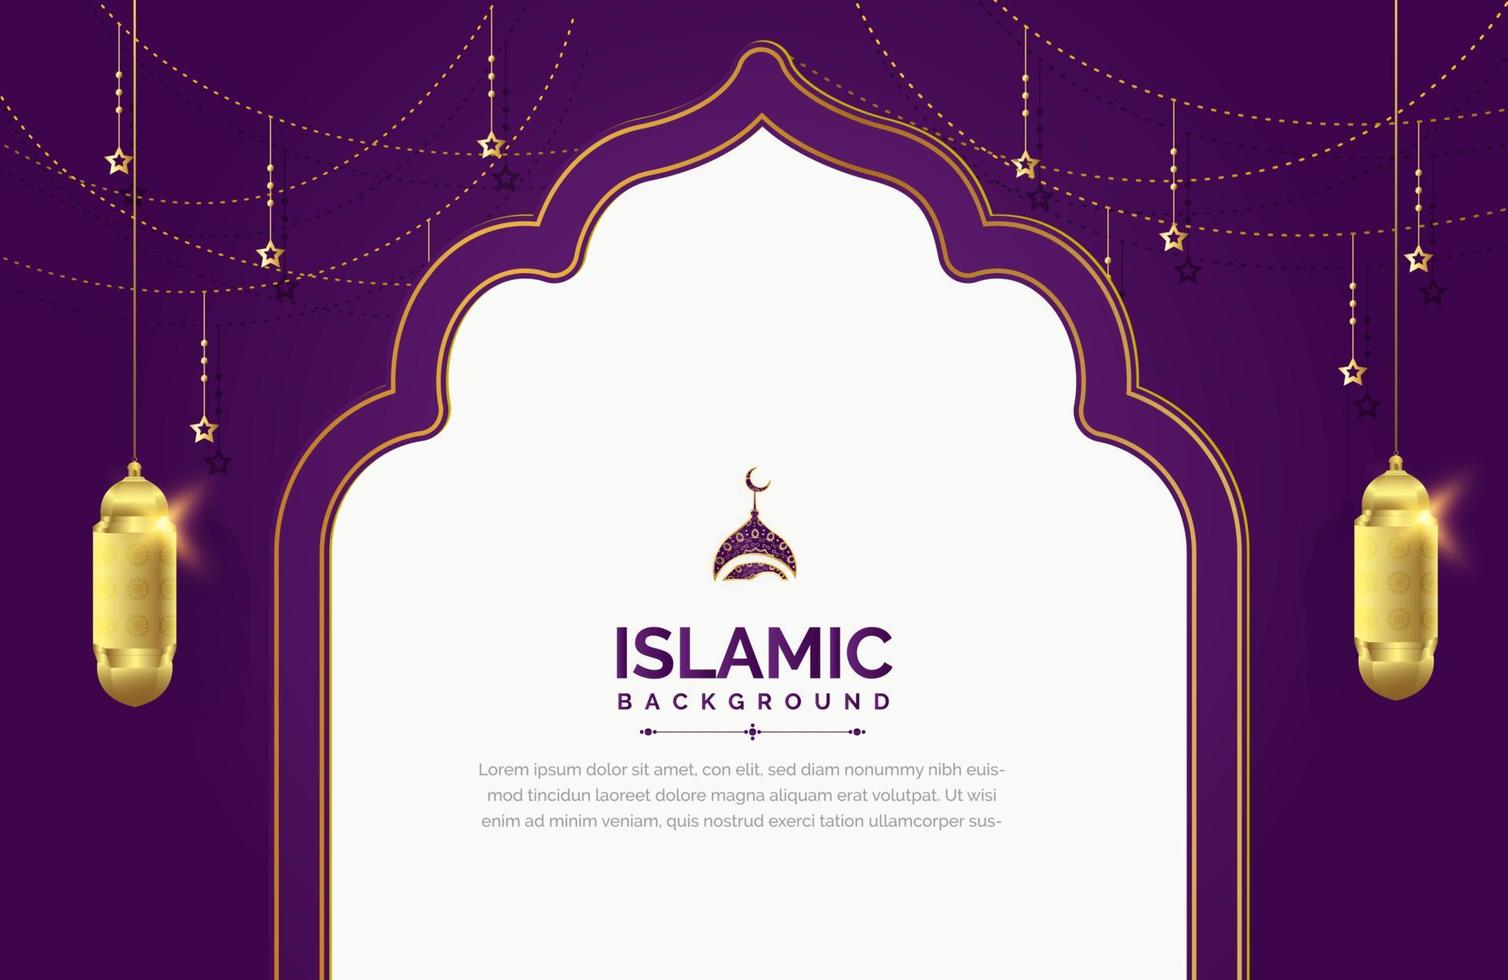 Islamic background in luxury style Vector illustration